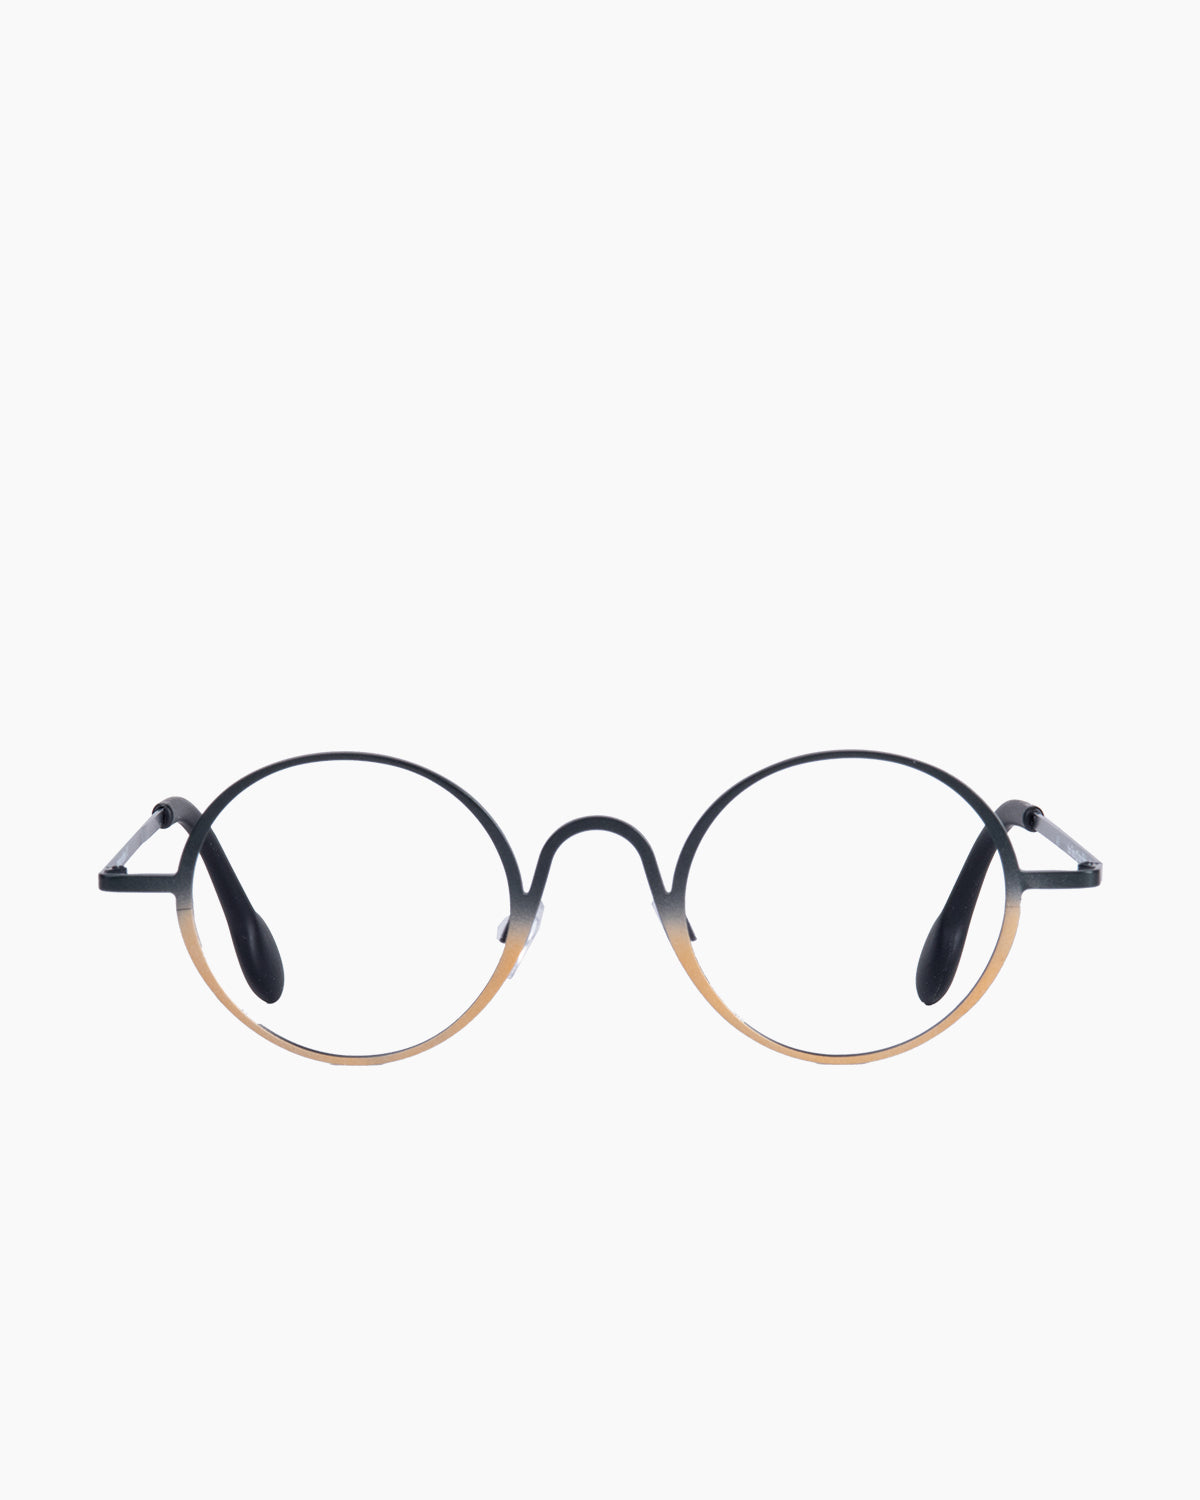 Theo - Times - 463 | glasses bar